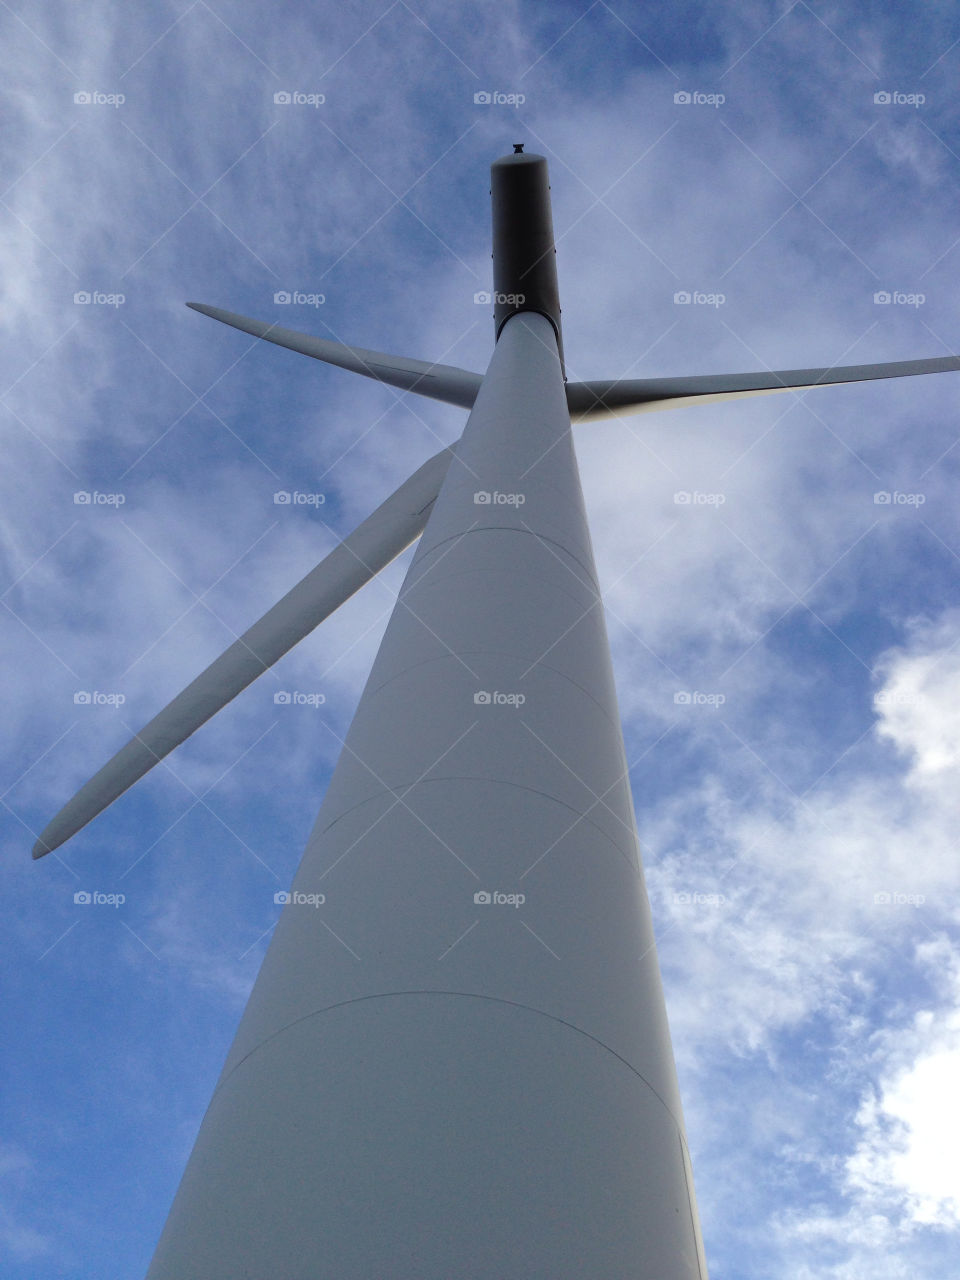 blades wind turbine by mark.doherty.359